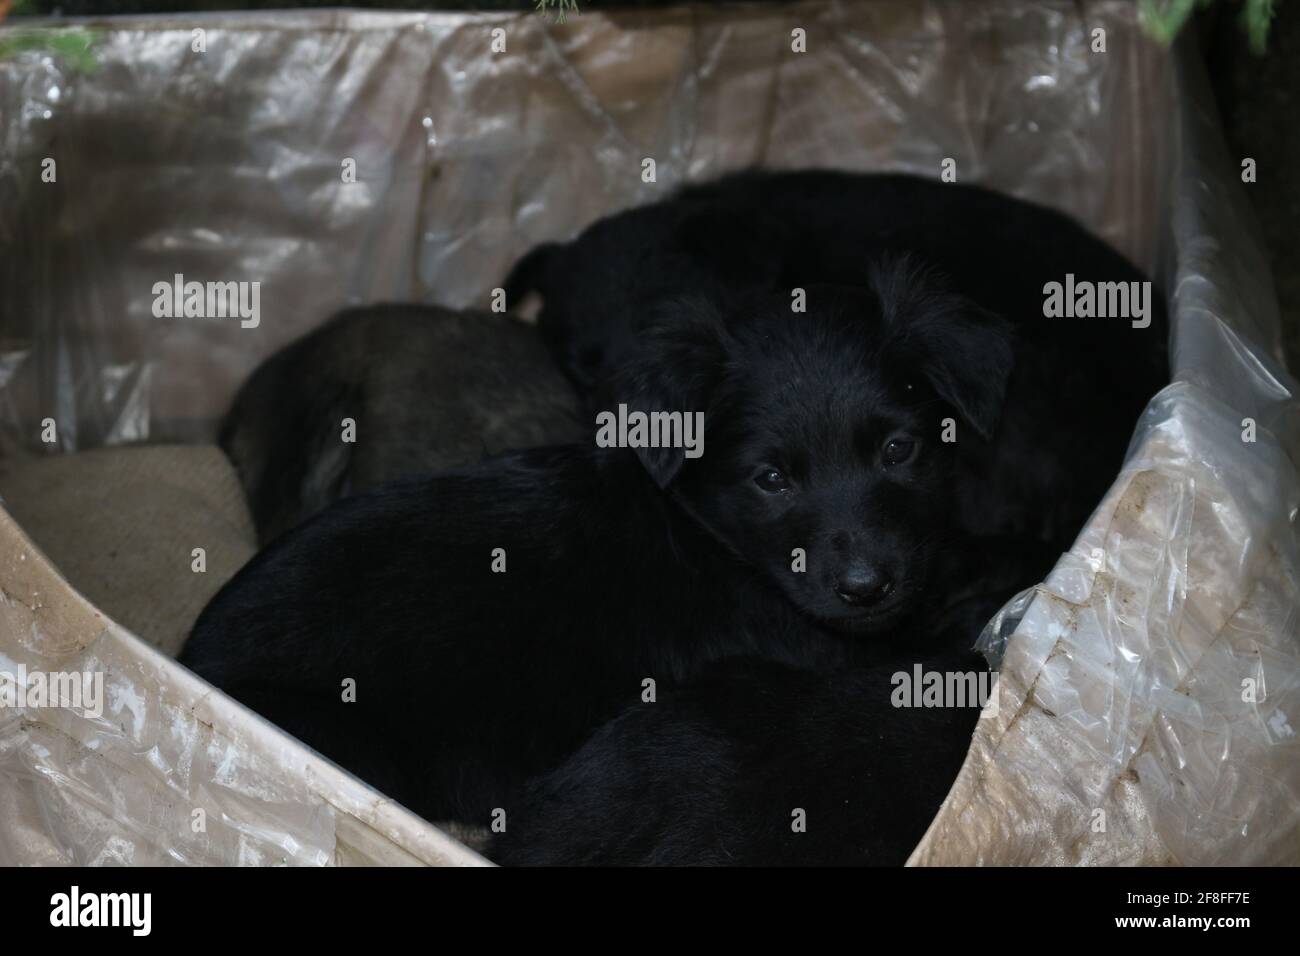 Black puppys, street cute pups, adorable small dogs, mongrel pups, homeless sad pups, pets on street. Stock Photo